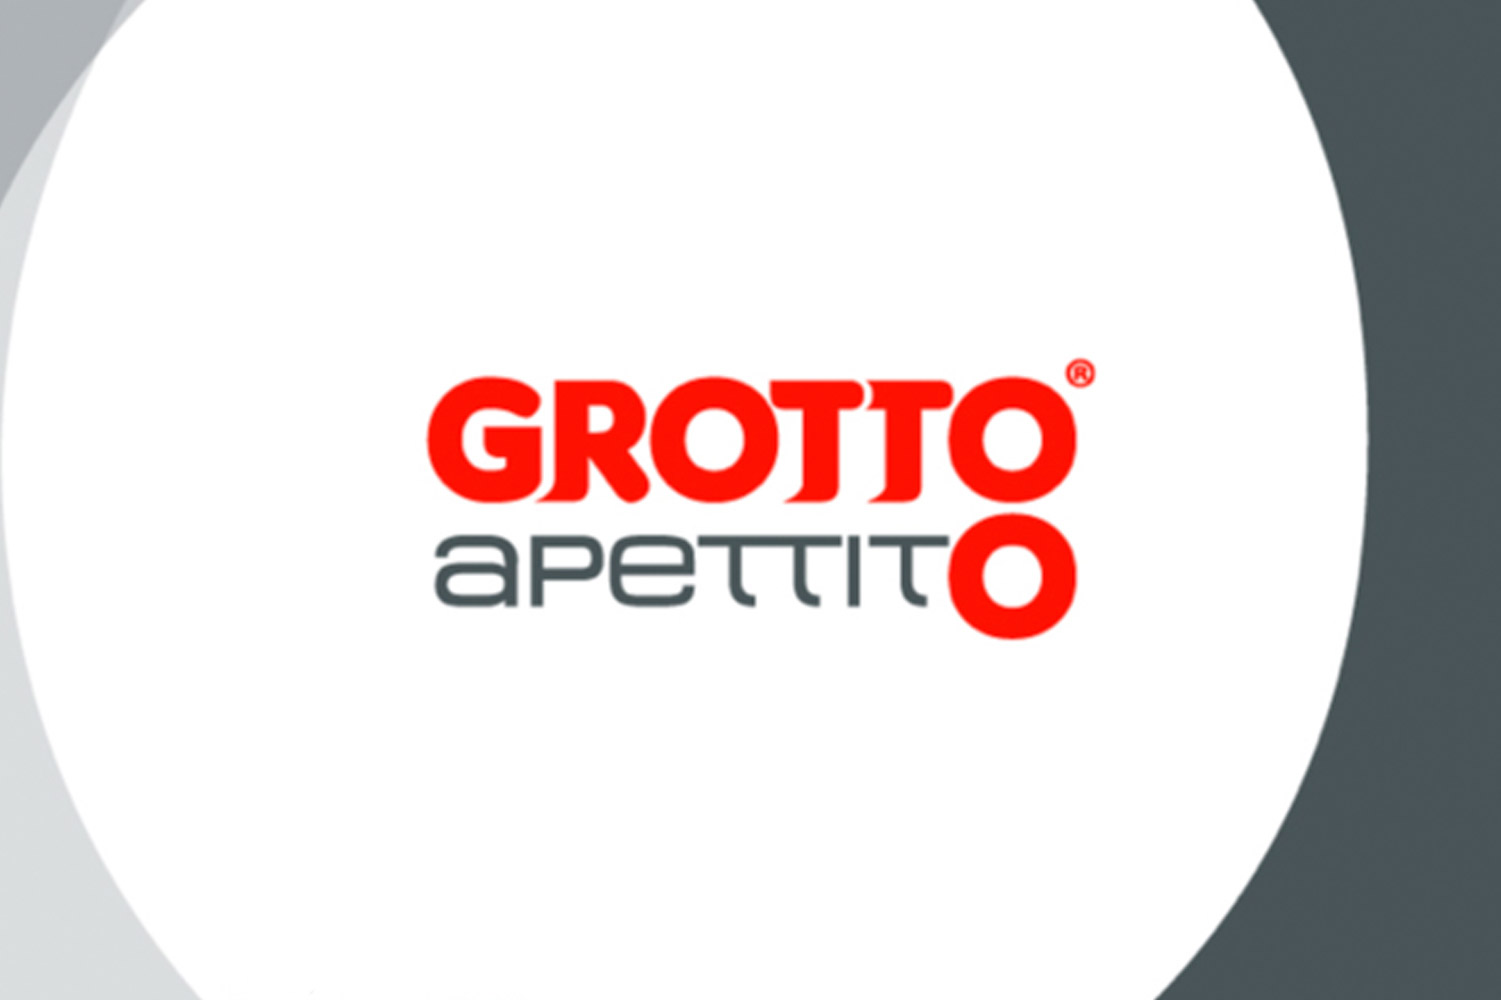 Grotto, corporate identity image